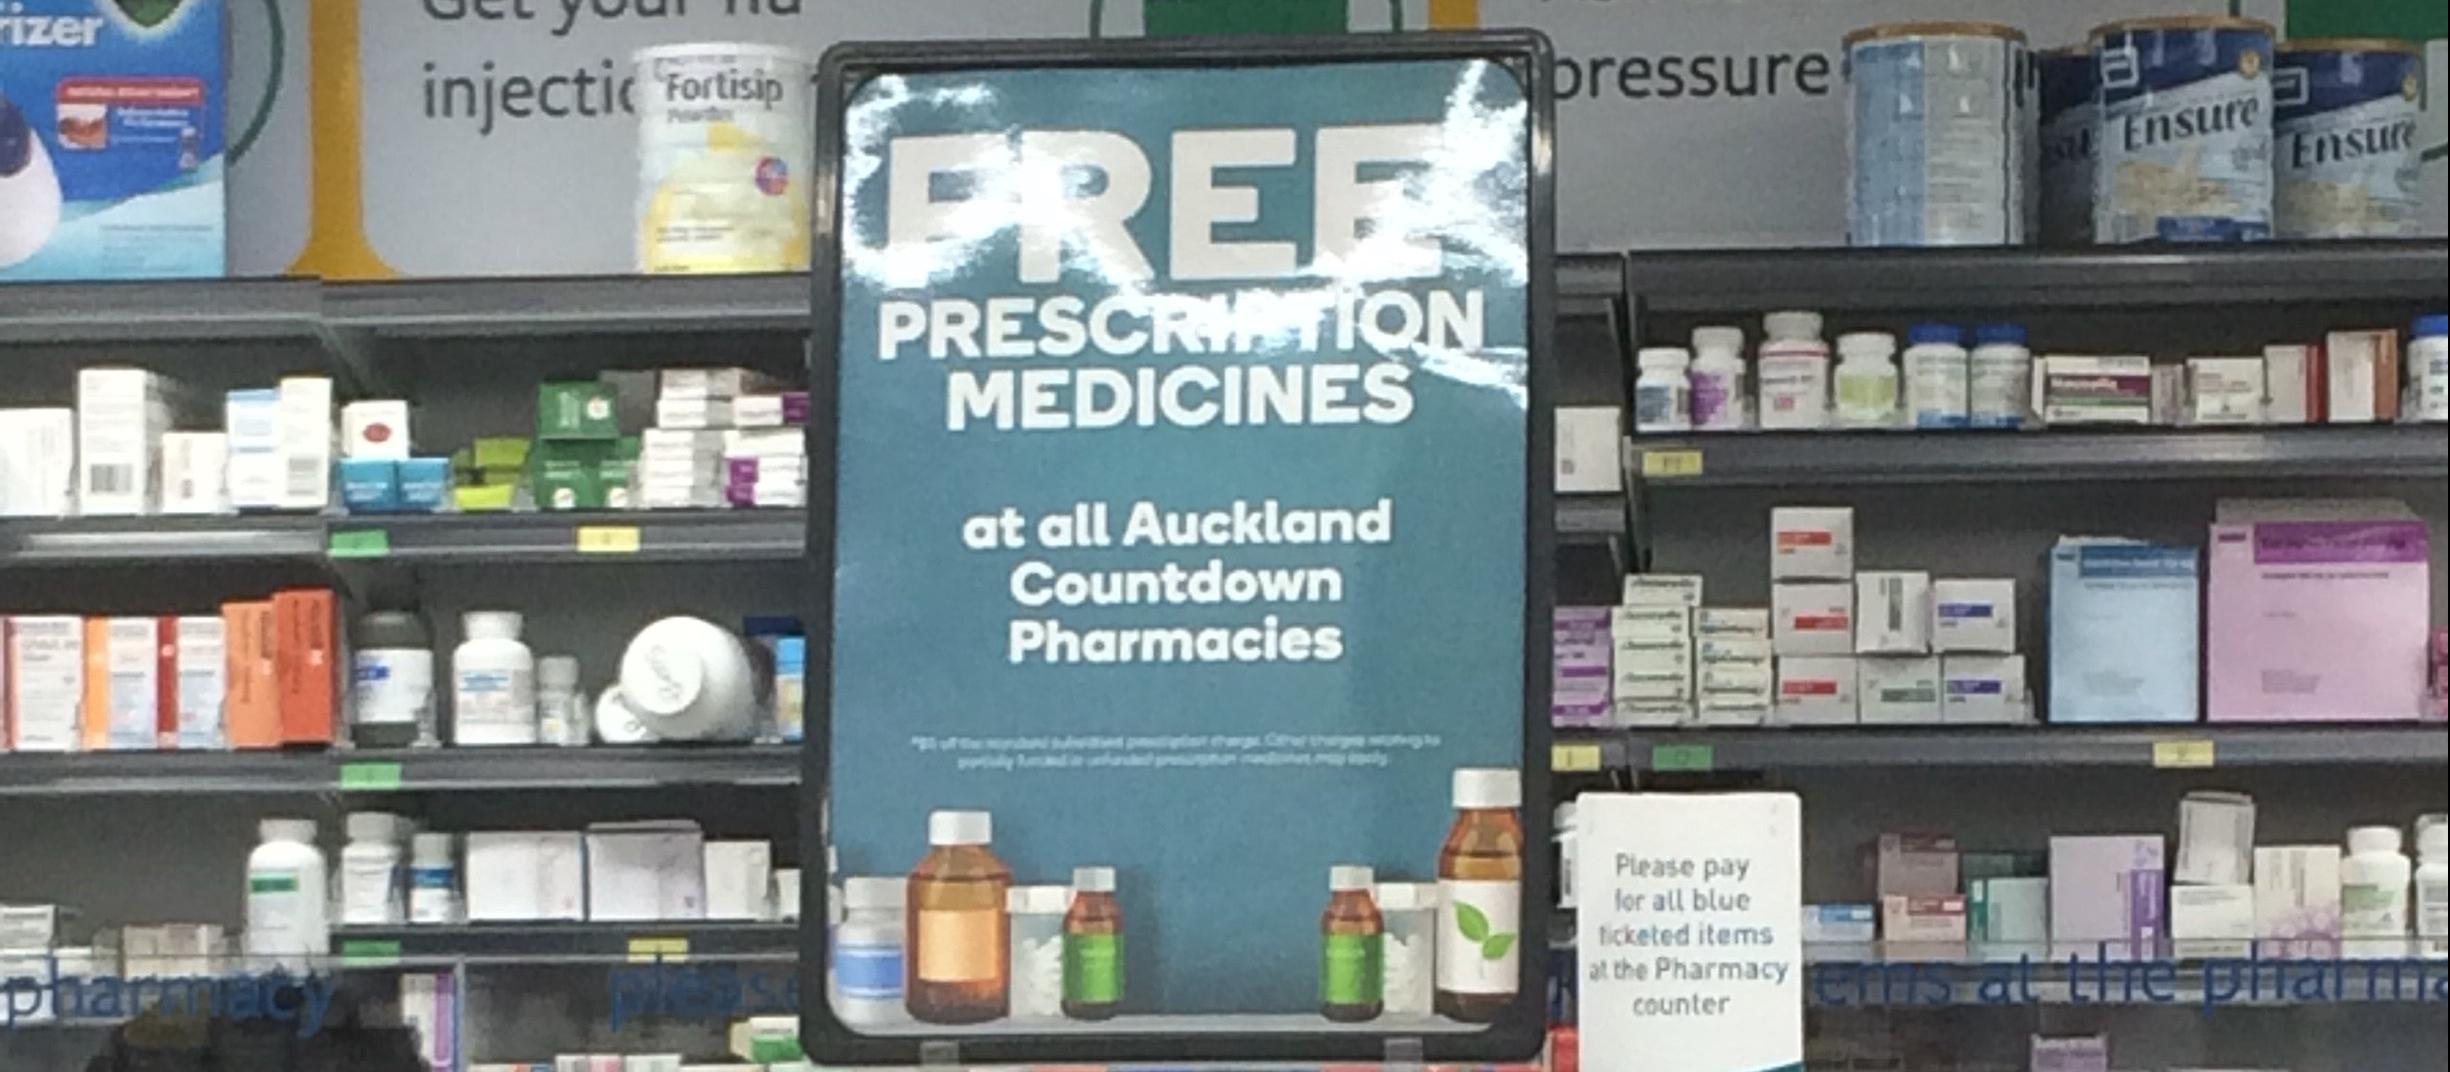 Free prescriptions